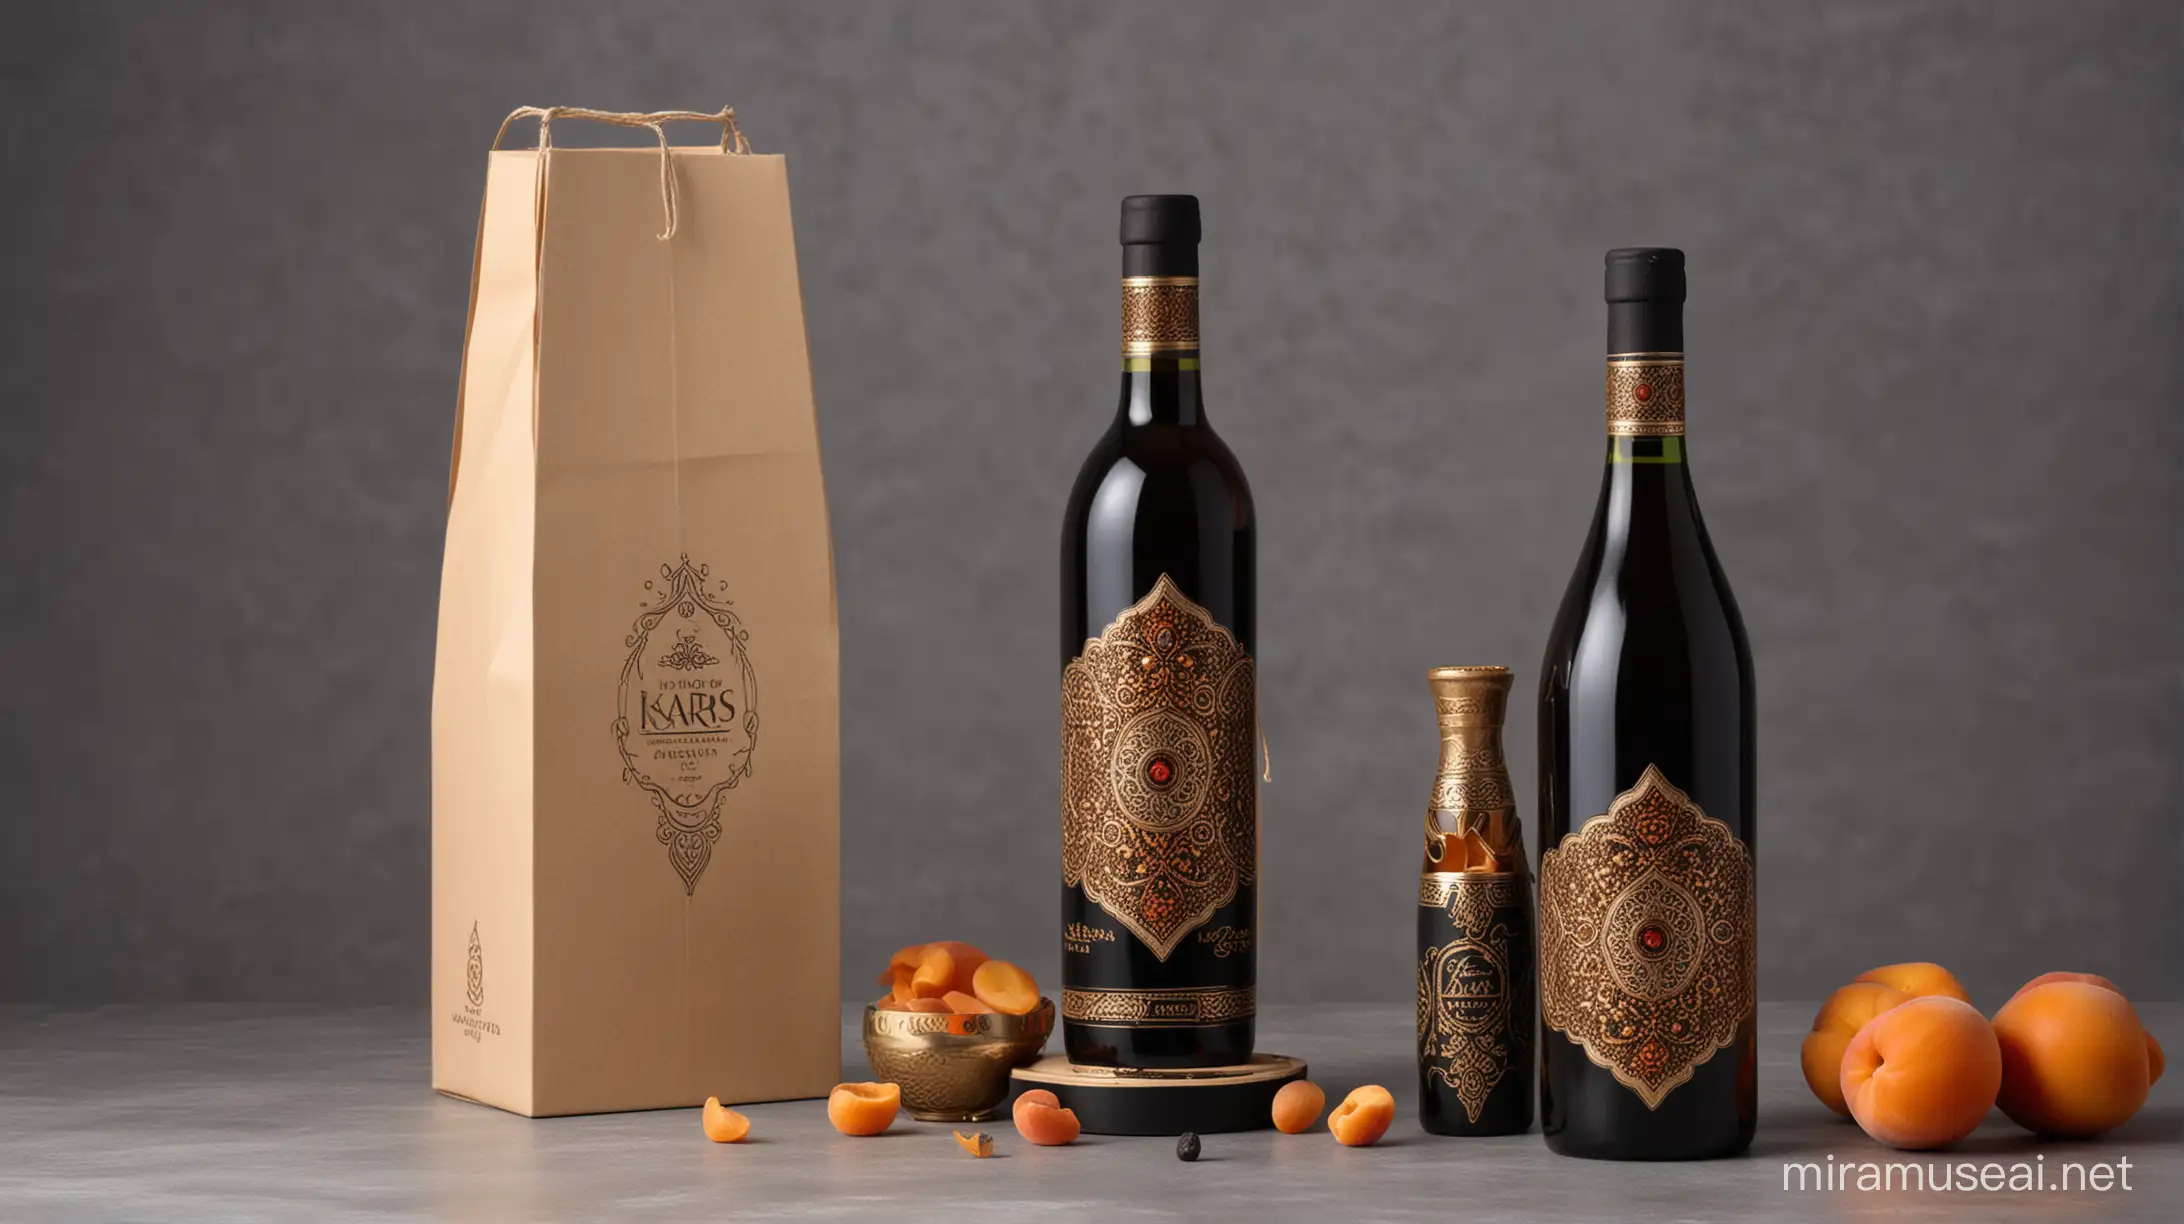 Luxurious Modern Armenian Apricot Wine KARS Bottle and Packaging